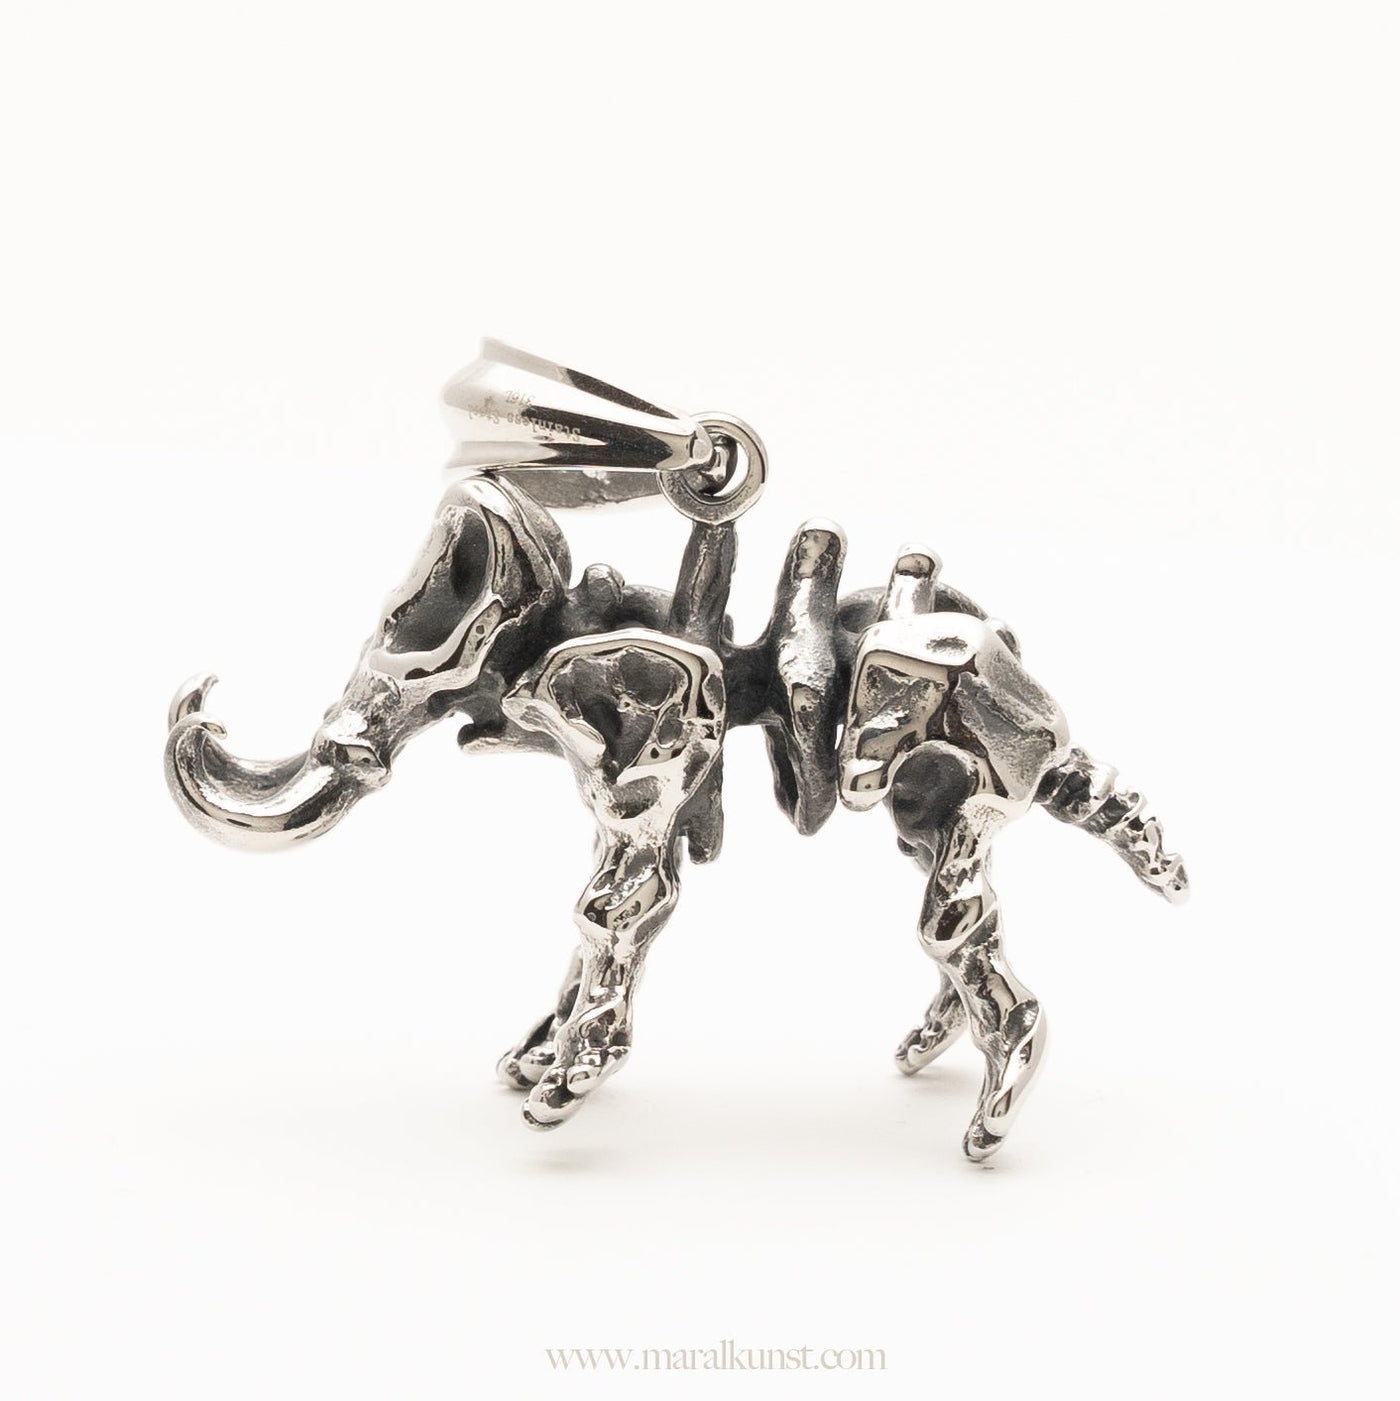 Fearless Elephant Skeleton Pendant - Maral Kunst Jewelry